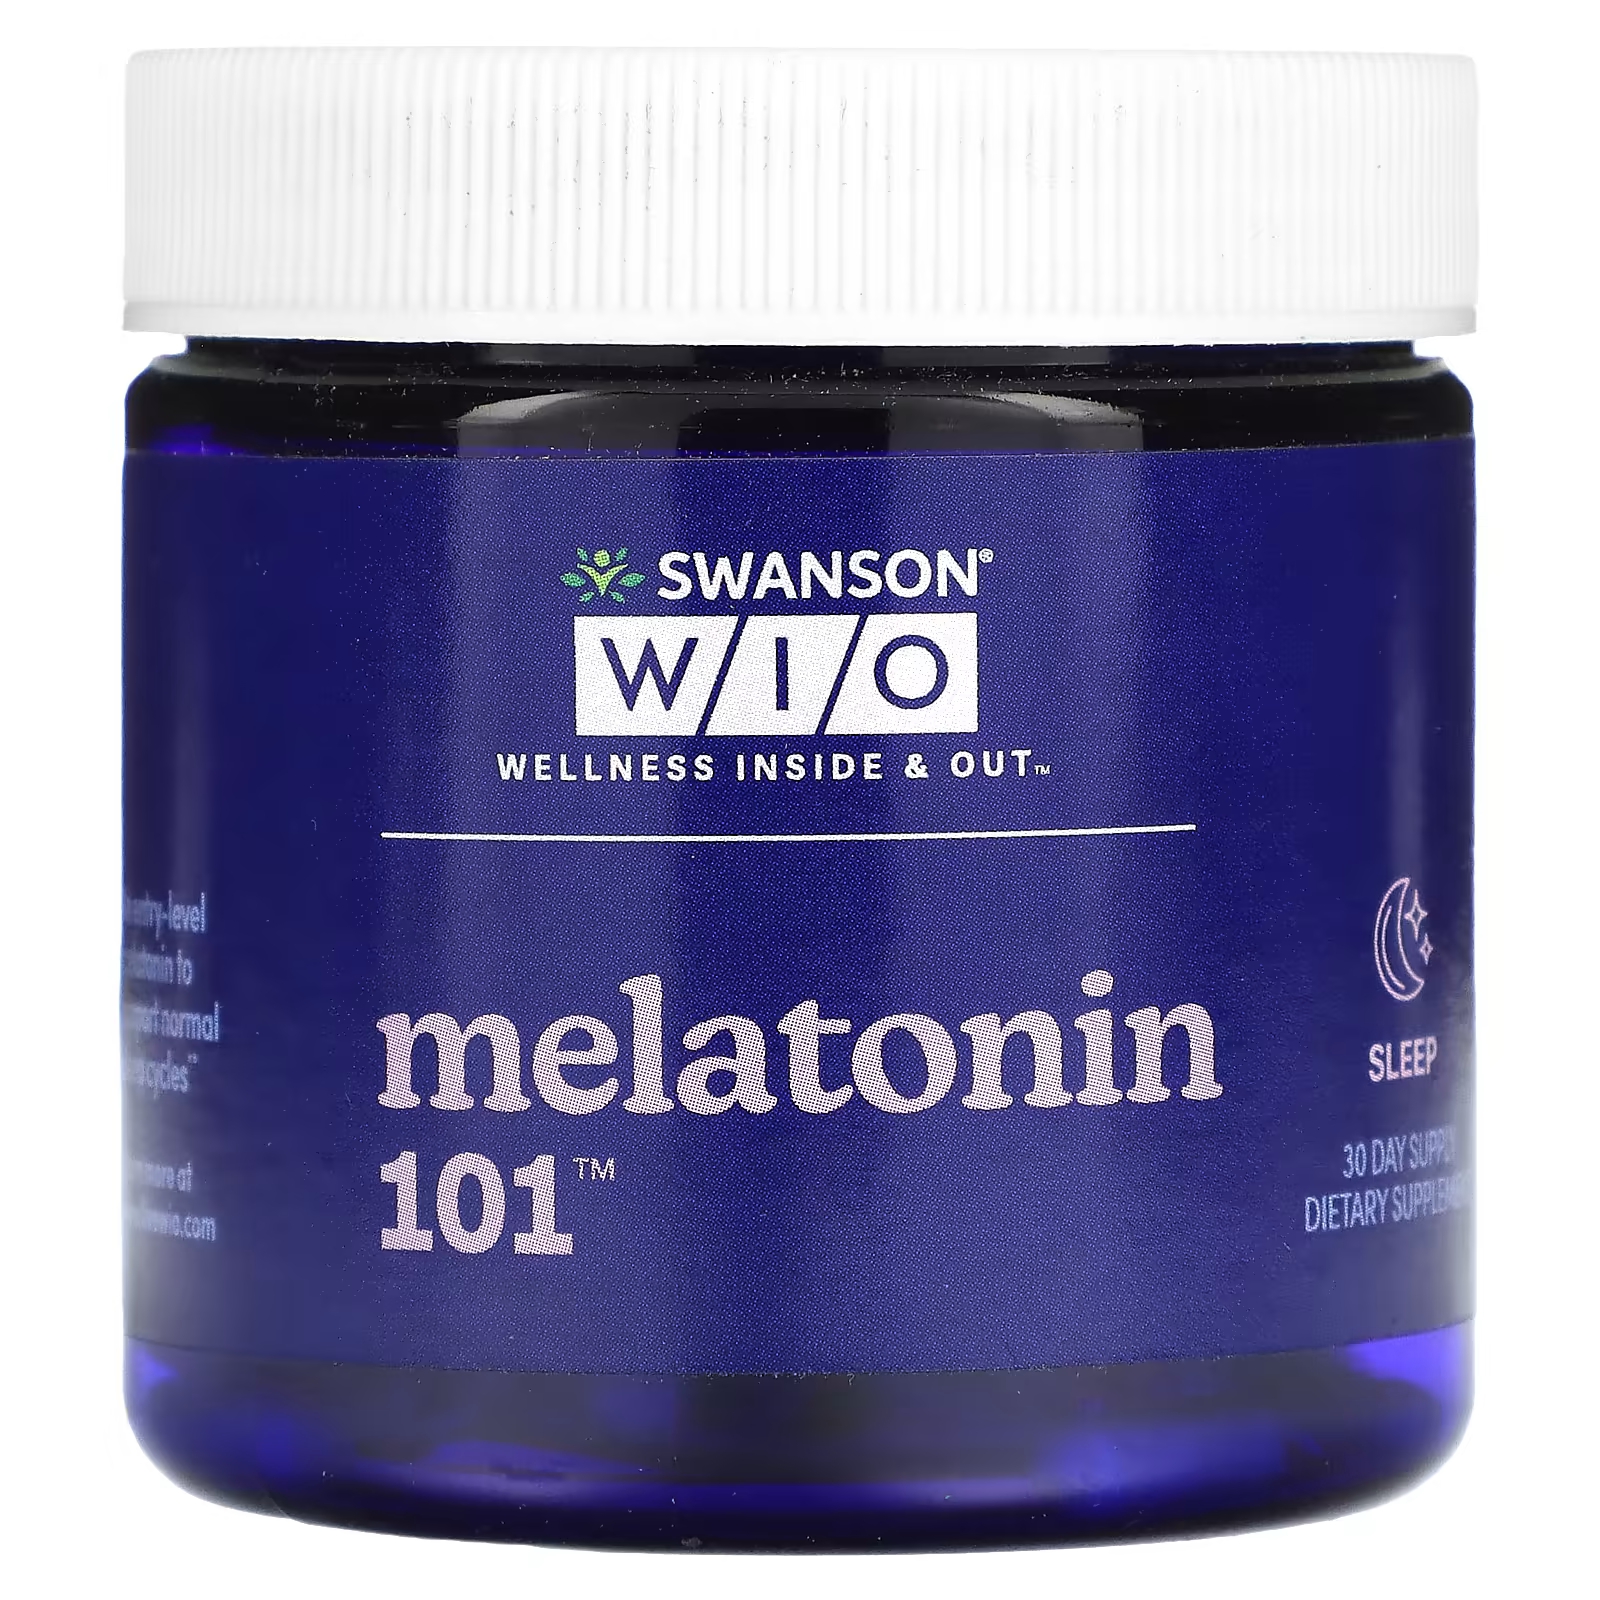 Мелатонин Swanson Wio 101, 30 капсул swanson wio мелатонин 101 30 капсул